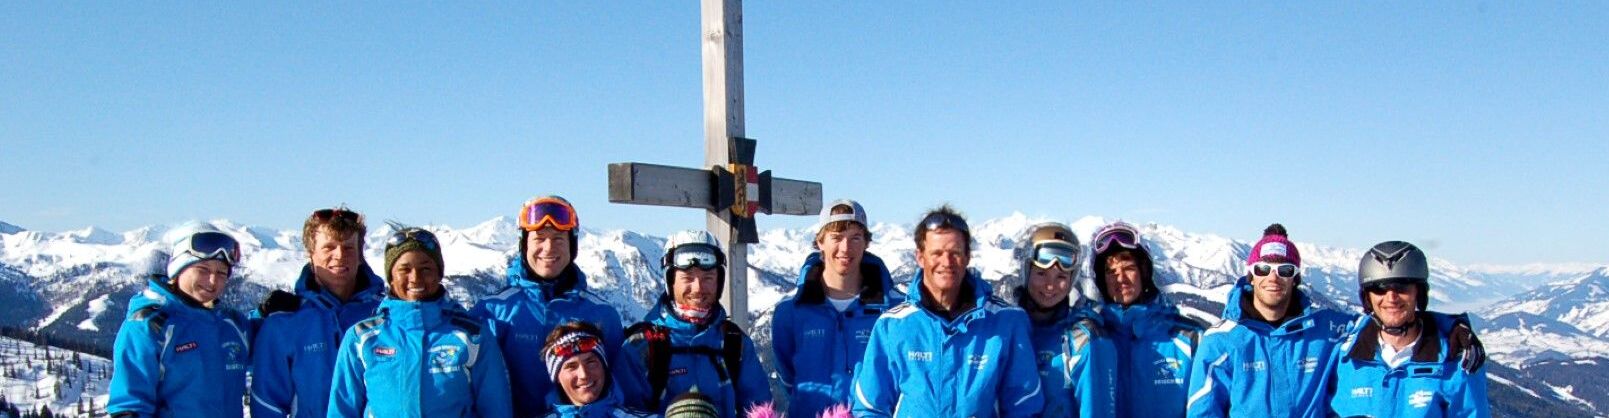 Ski school Flachau - well trained ski instructors